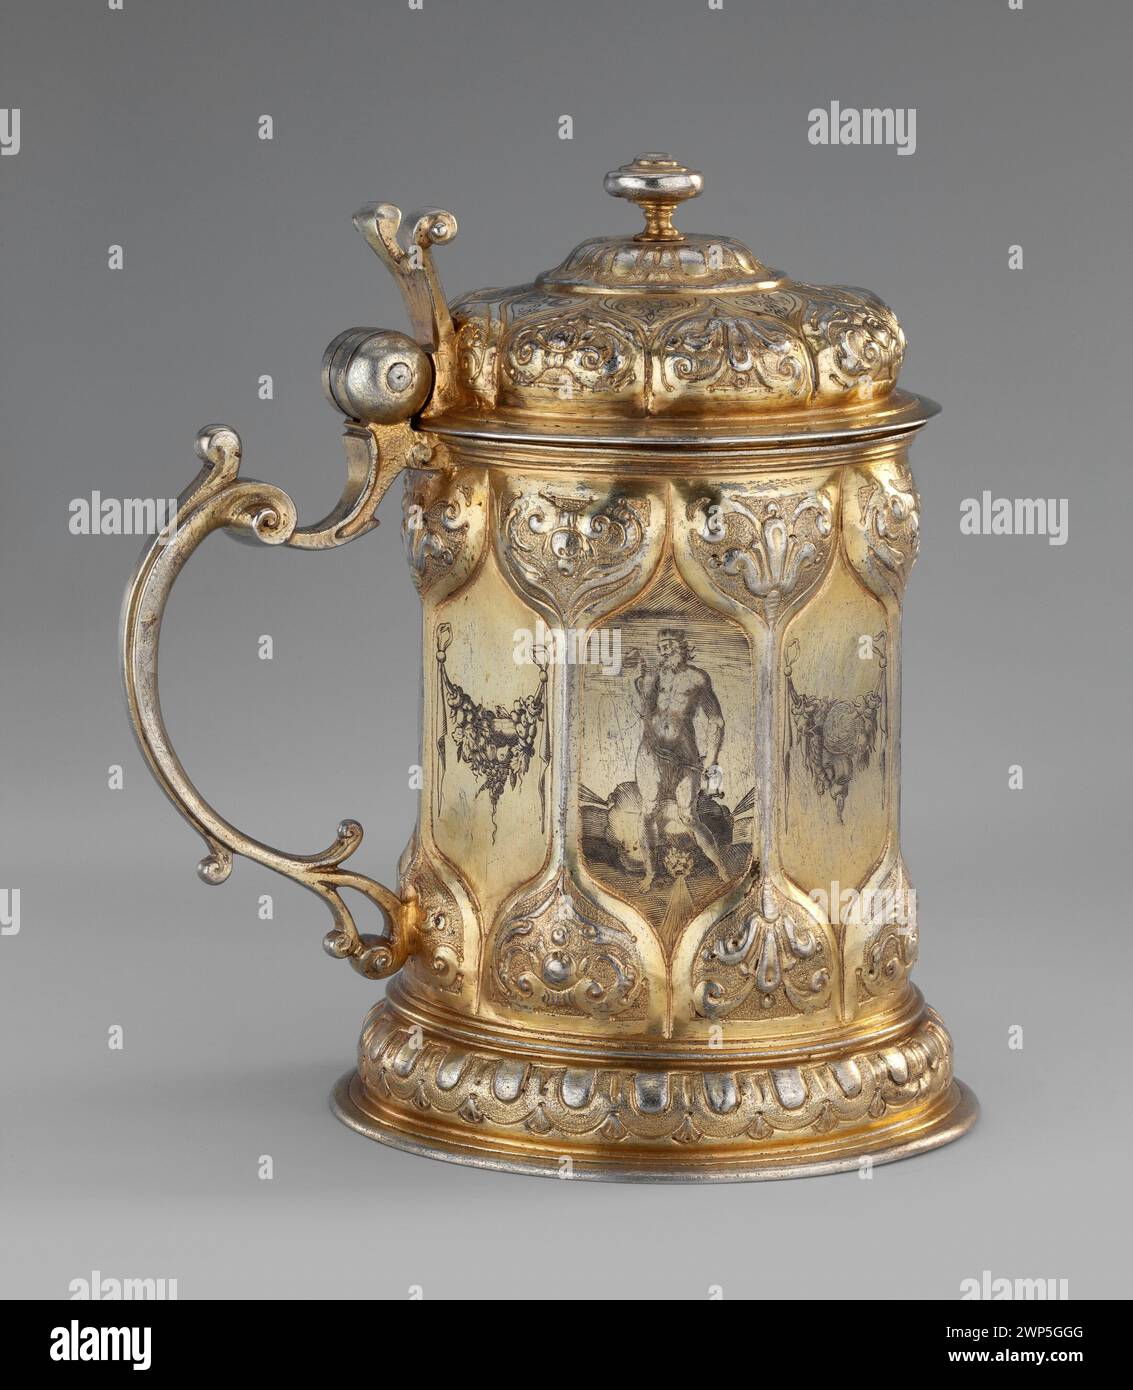 A mug with seasons staff; Petrus, Andreas (fl. Ca 1629-1630); 1630-1635 (1630-00-00-1635-00-00);Cupid (mitol.), Bachus (Mitol.), Ceres (Mitol.), Platoon (Mitol.), Venus (Mitol.), Seasons (Personification), Purchase (provenance) Stock Photo